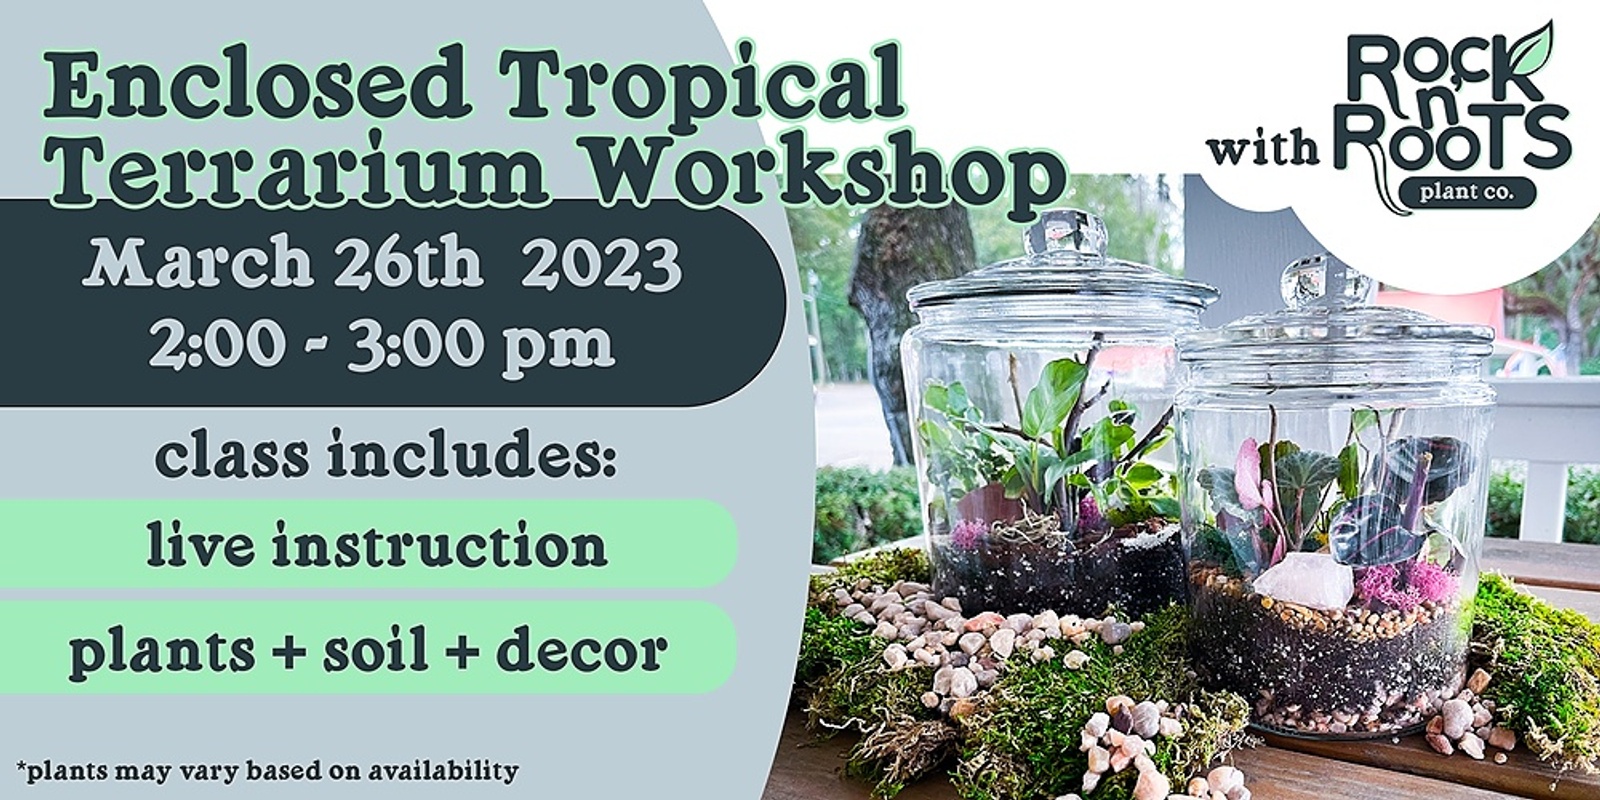 Enclosed Tropical Terrarium Workshop at Rock n' Roots Plant Co. (Pawleys Island, SC)